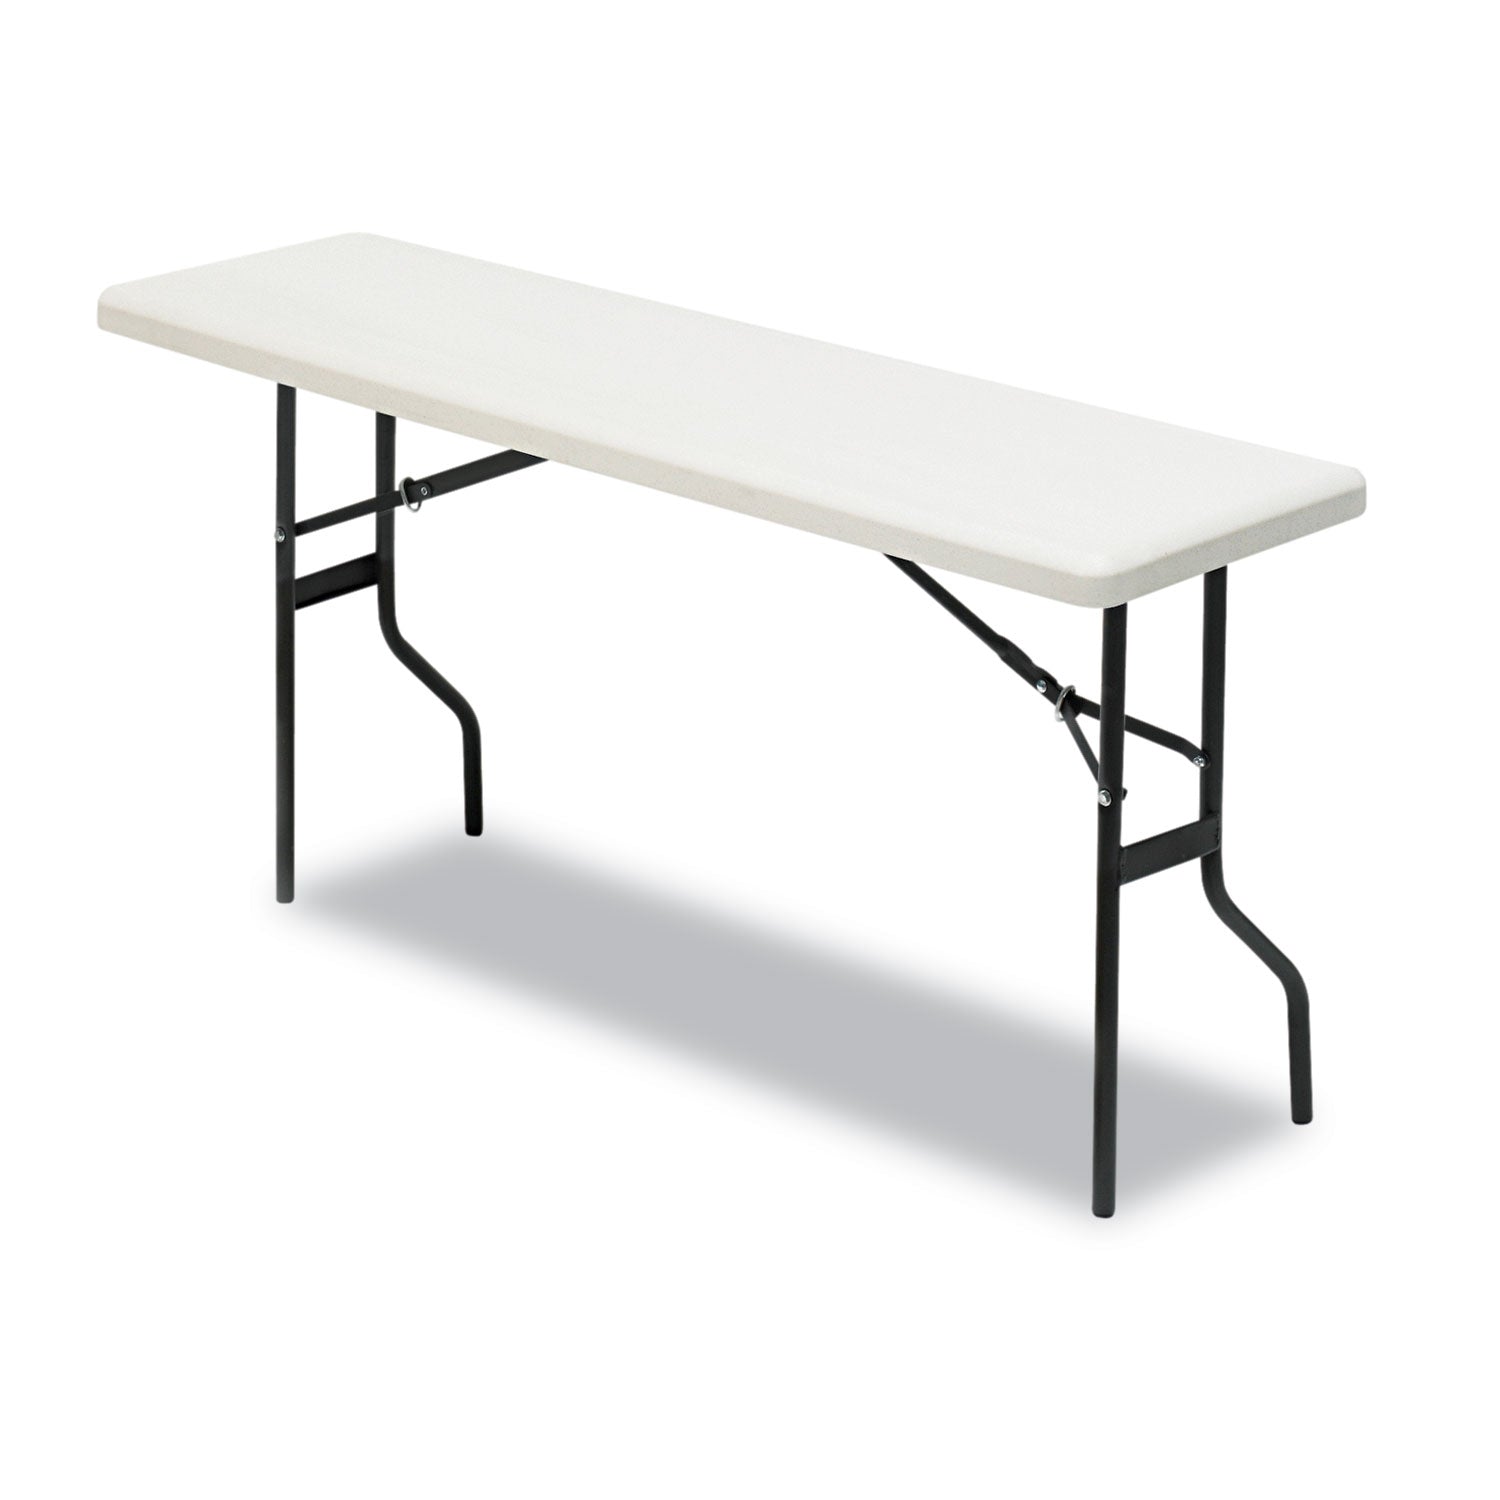 IndestrucTable Classic Folding Table, Rectangular, 60" x 18" x 29", Platinum - 